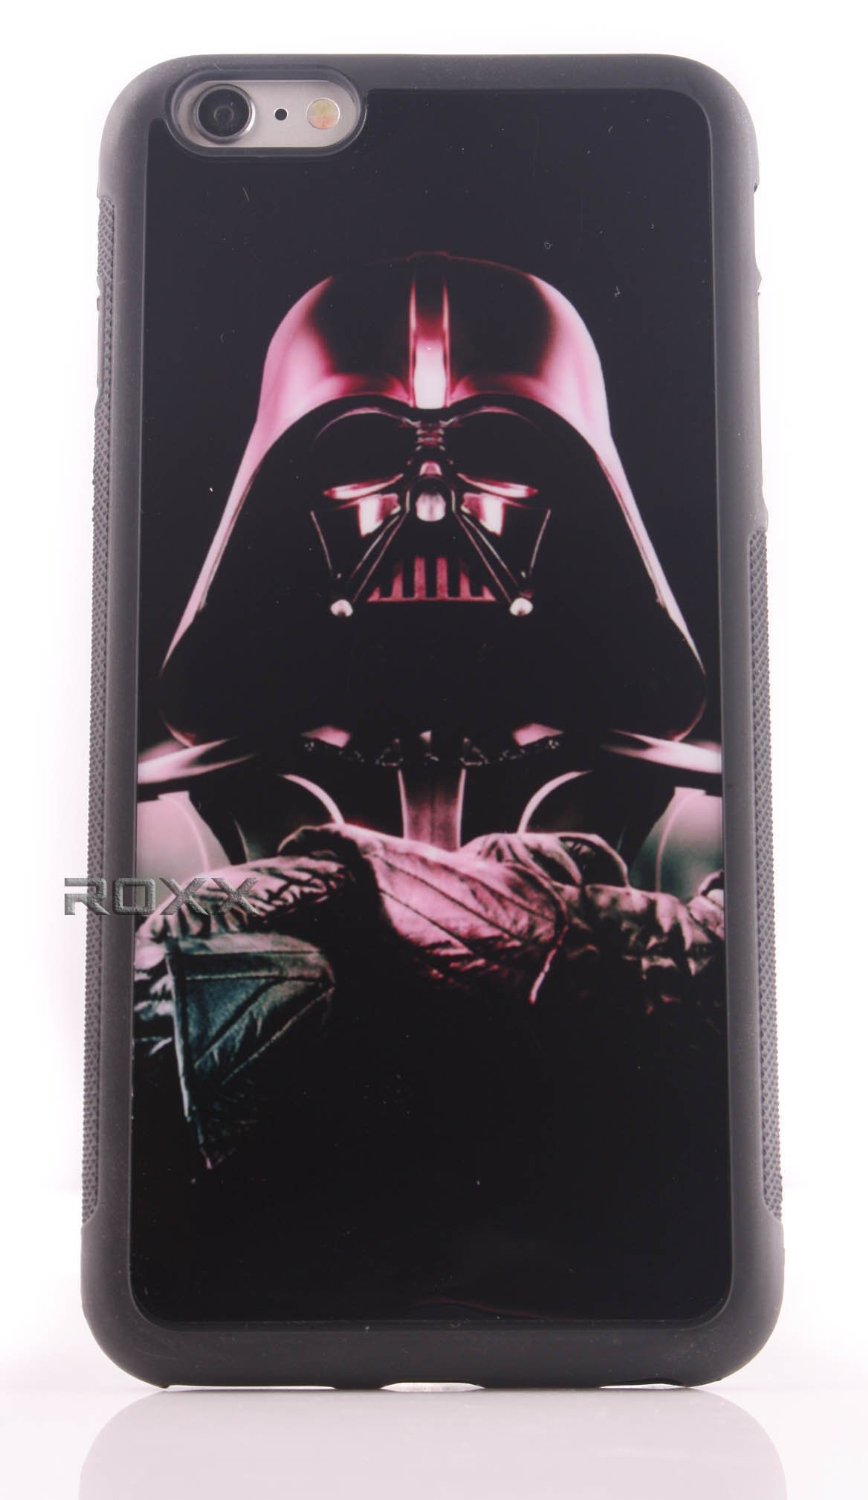 Darth Vader Rubber Grip iPhone 6 Case